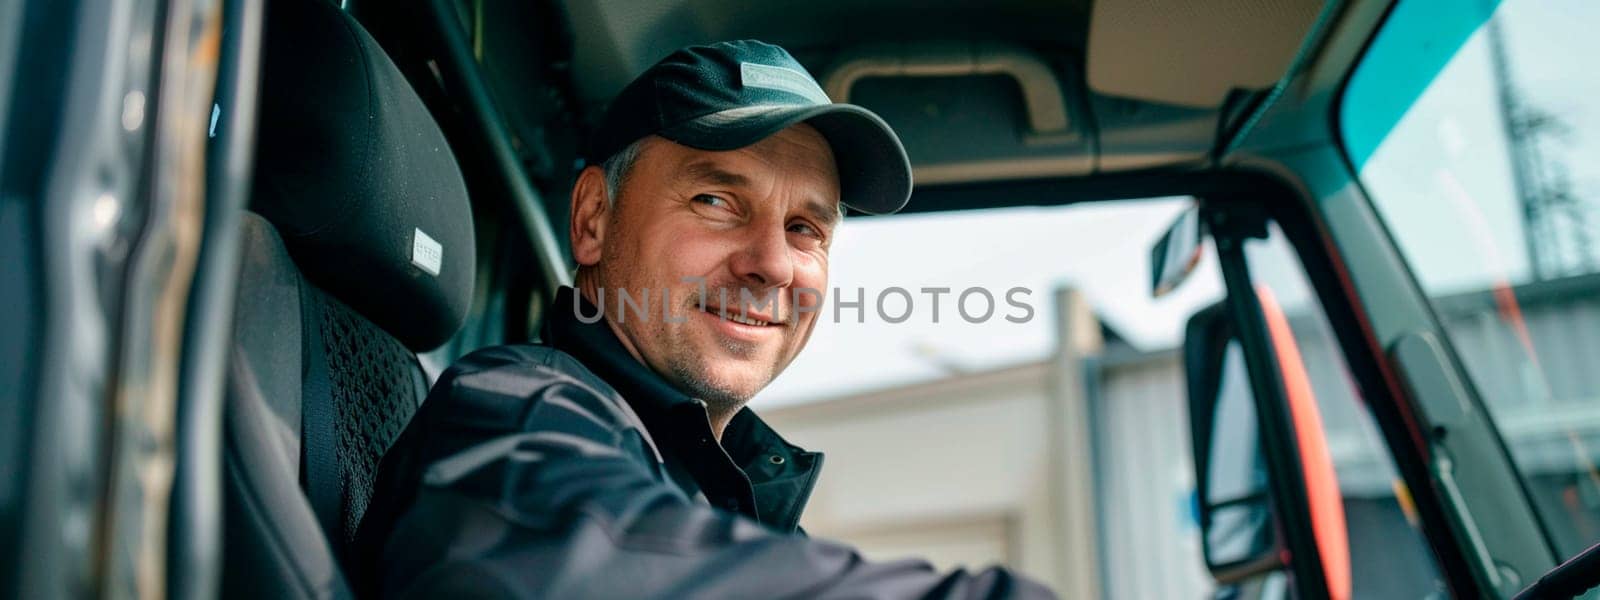 Trucker driving a car. Selective focus. by yanadjana